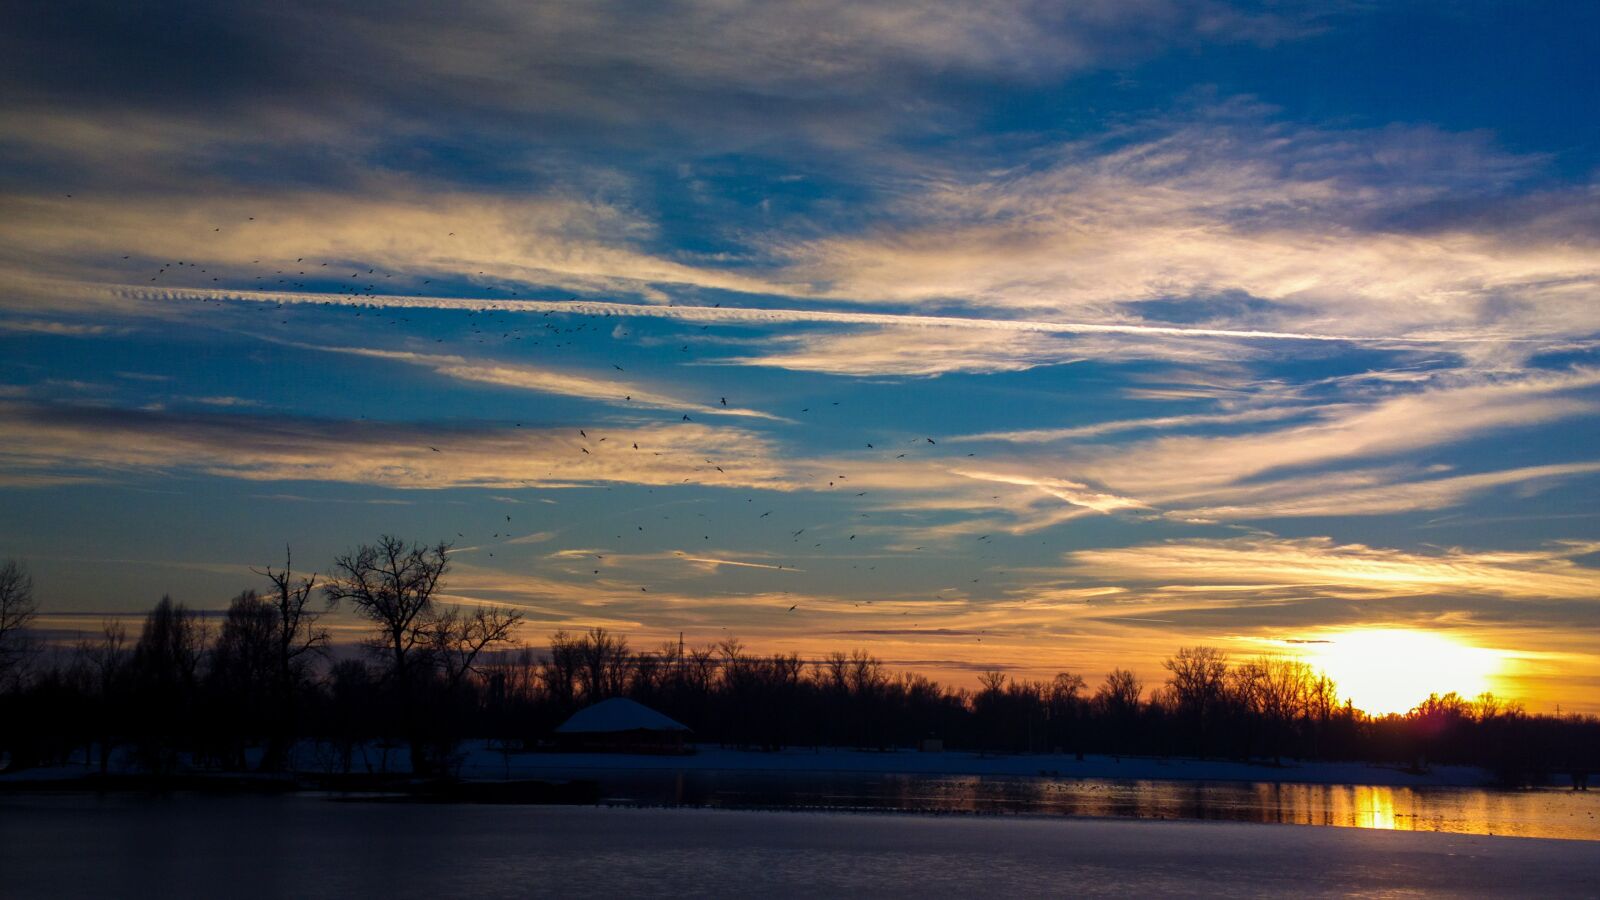 Nokia 808 PureView sample photo. Lake, sunset, landscape photography